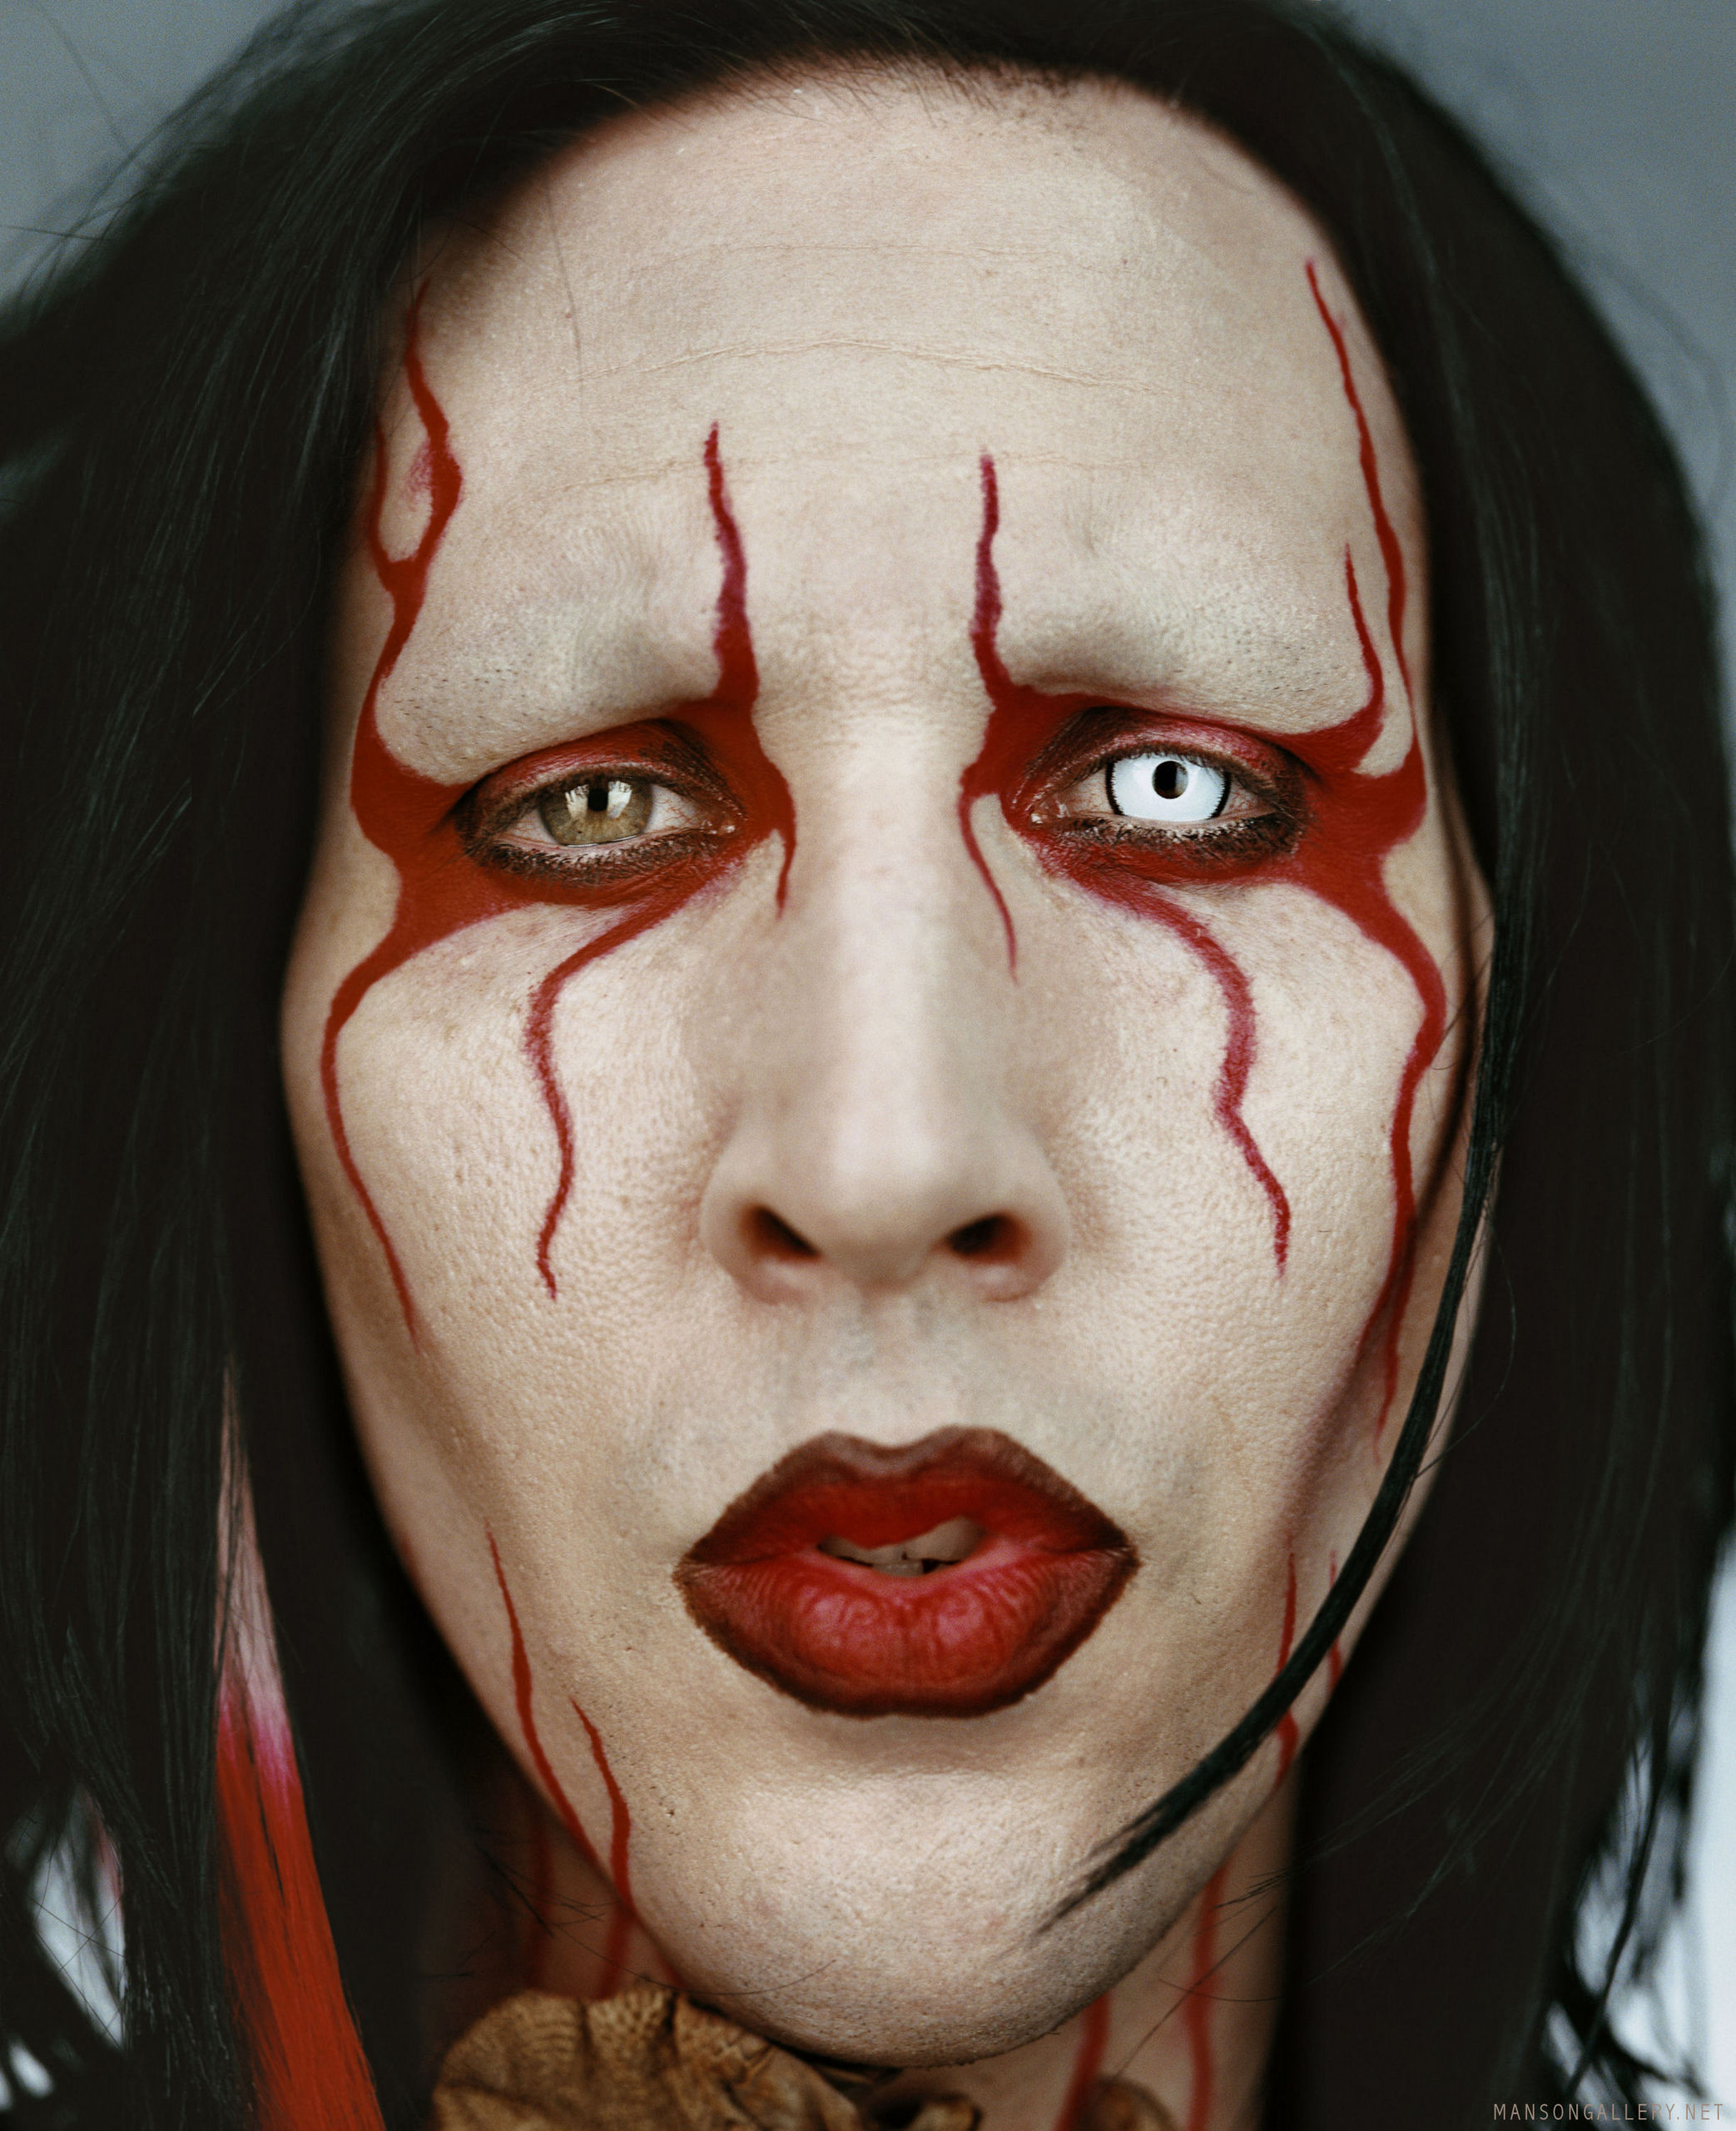 Marilyn-Manson-ospite-nuovo-singolo-mister-oizo